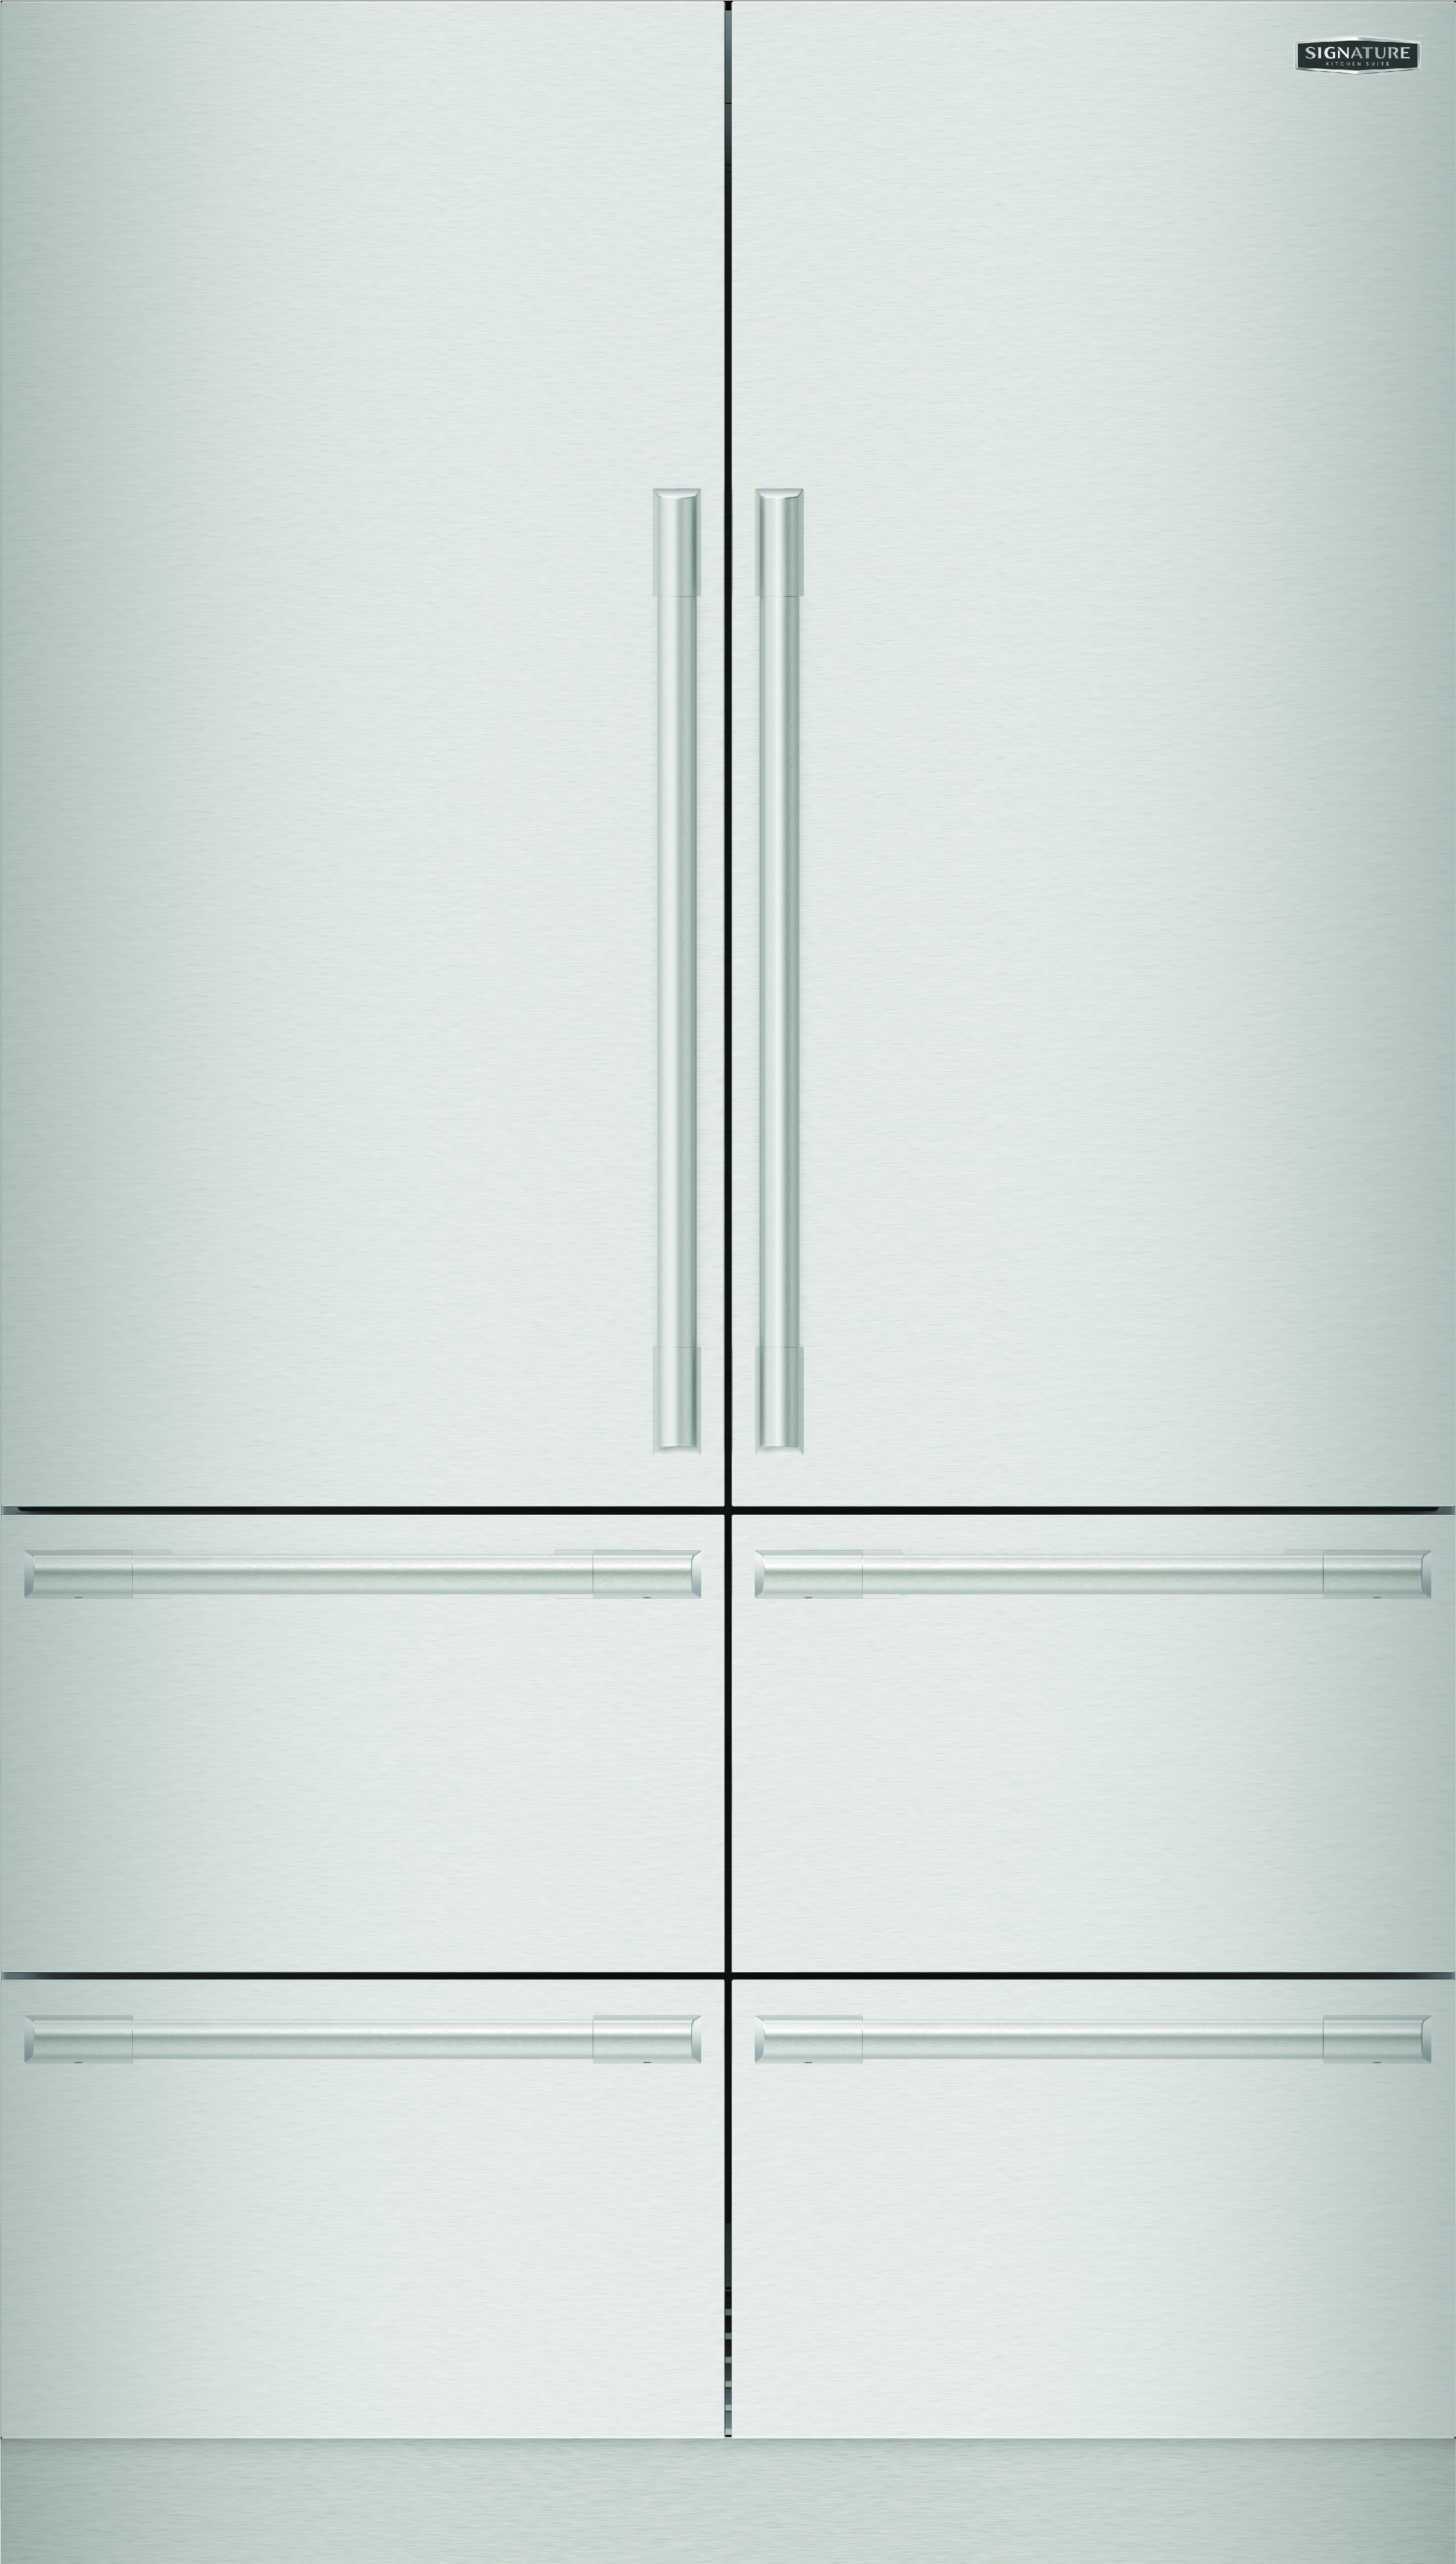 SKS 48-inch French Door Refrigerator.jpg